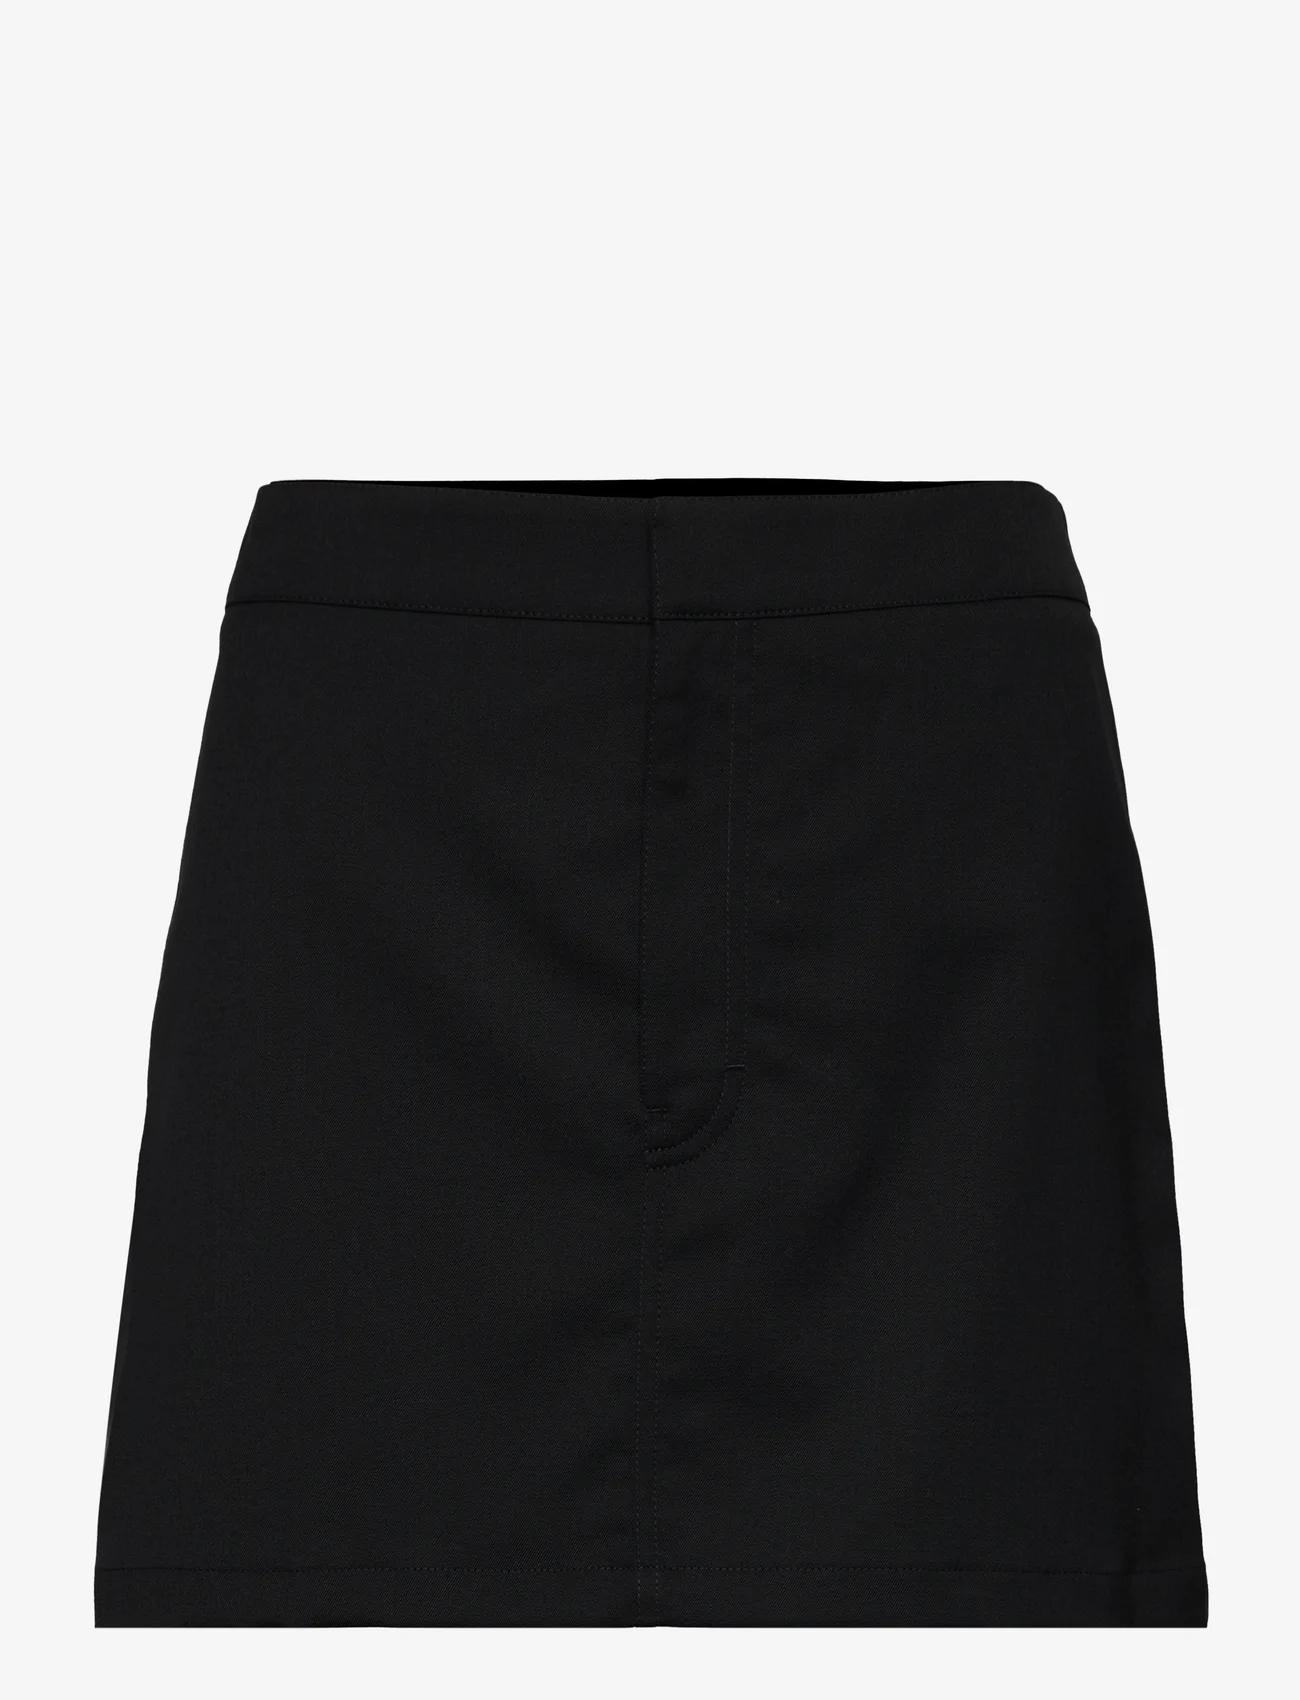 Filippa K - Short Tailored Skirt - miniseelikud - black - 0